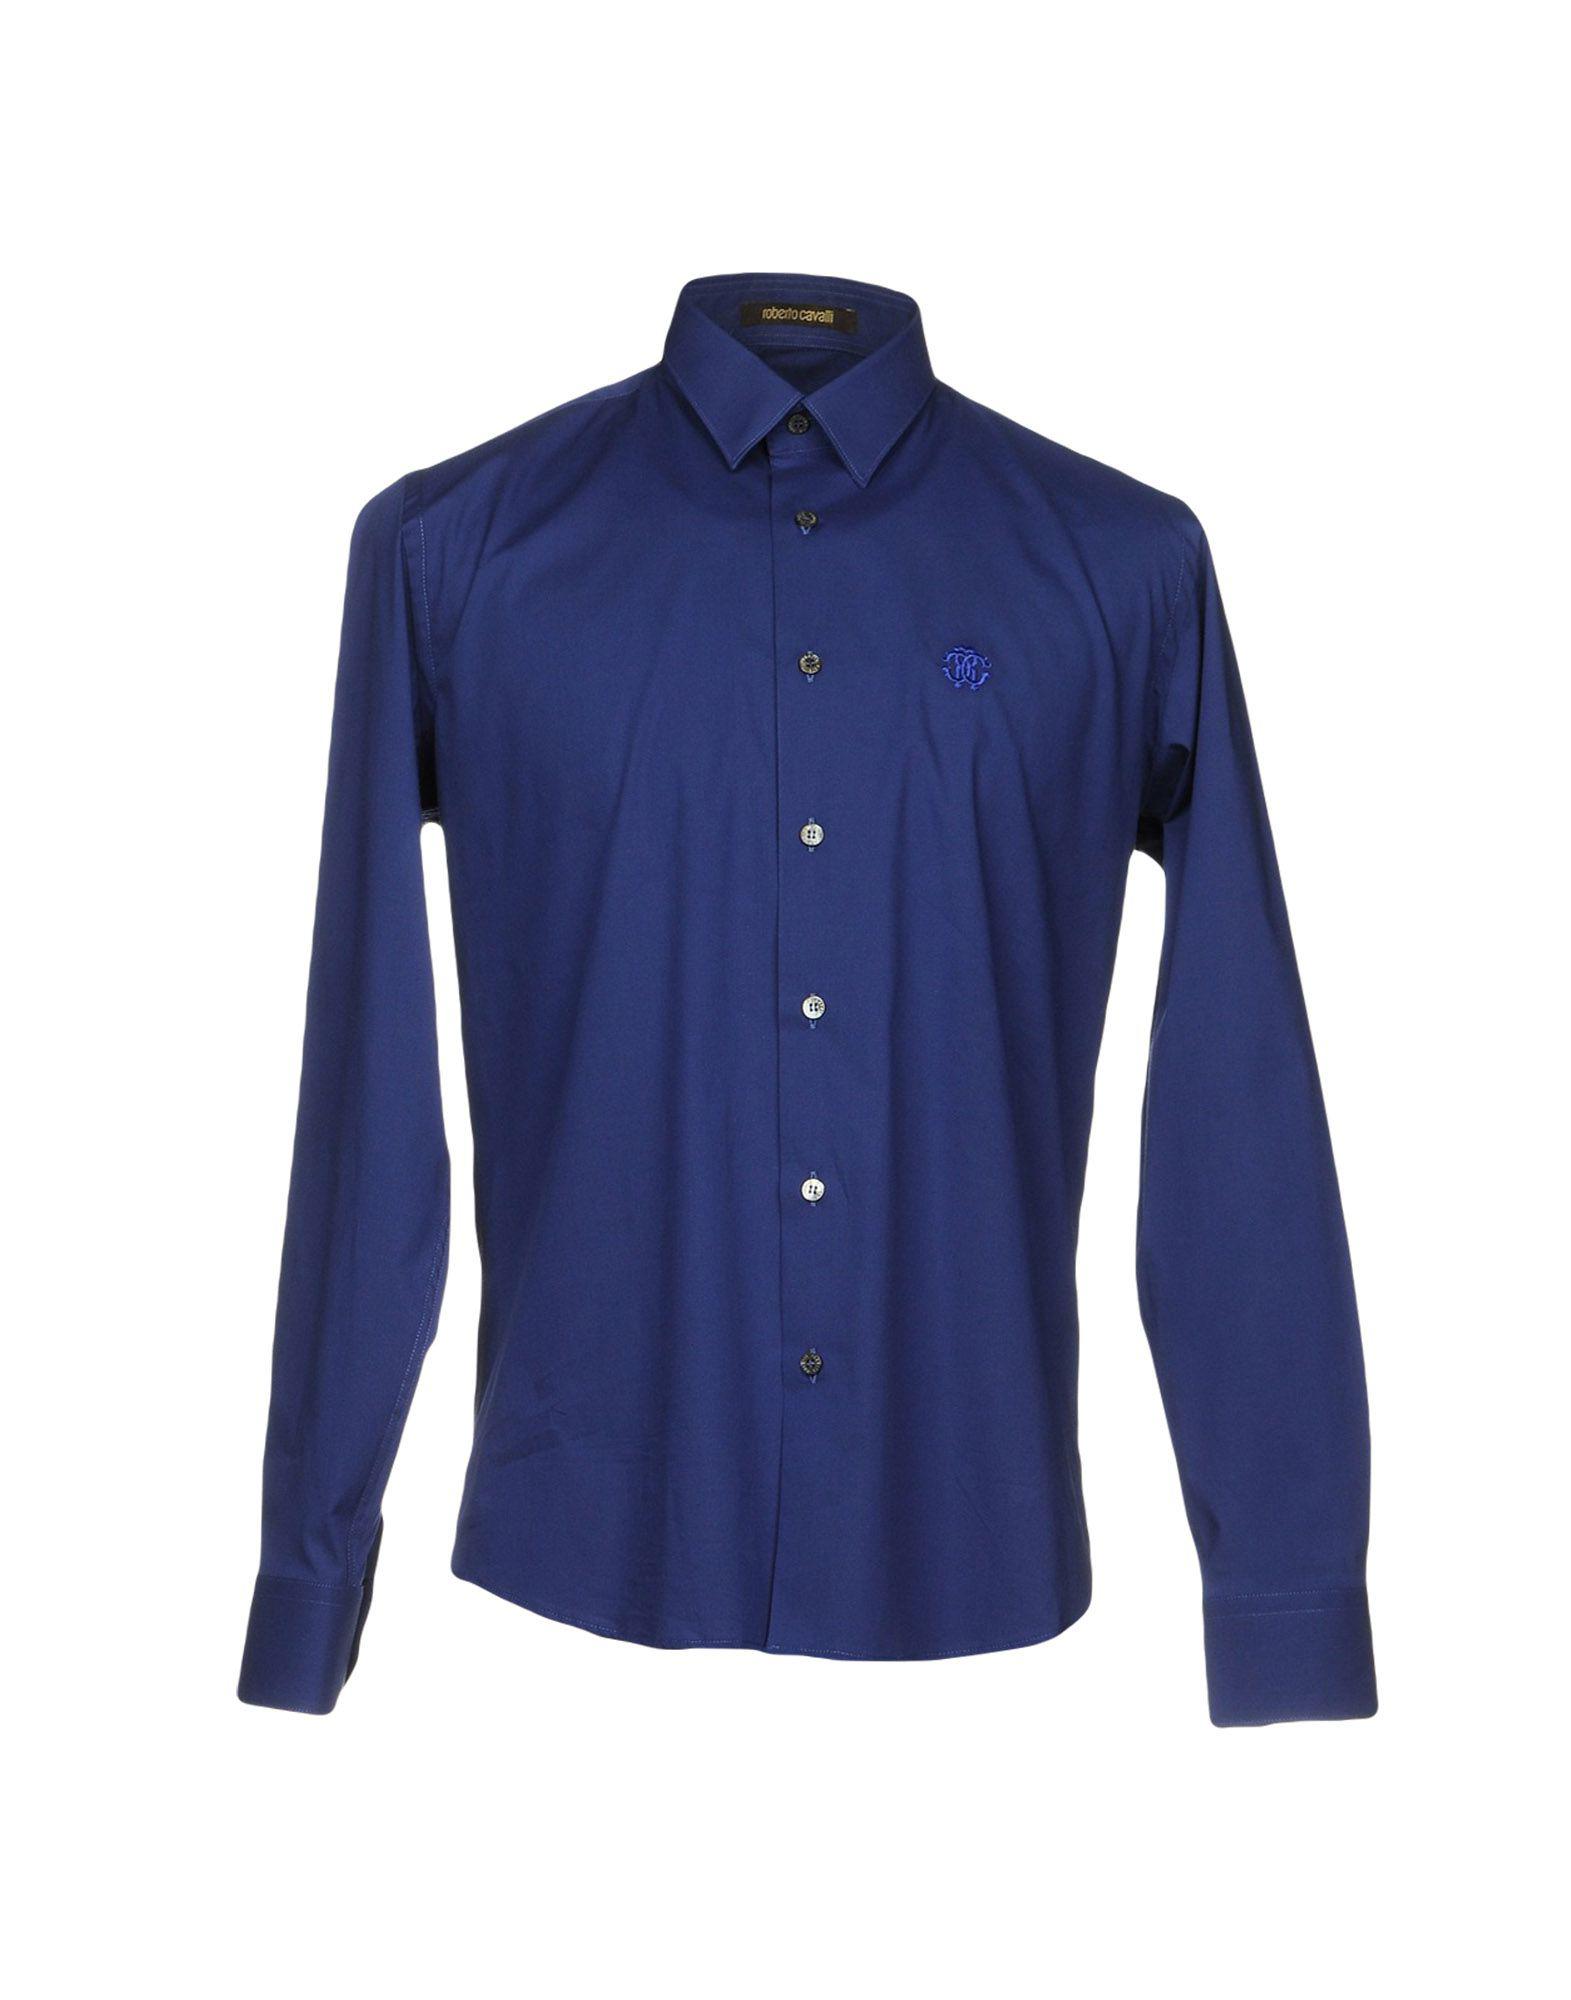 Lyst - Roberto Cavalli Shirt in Blue for Men